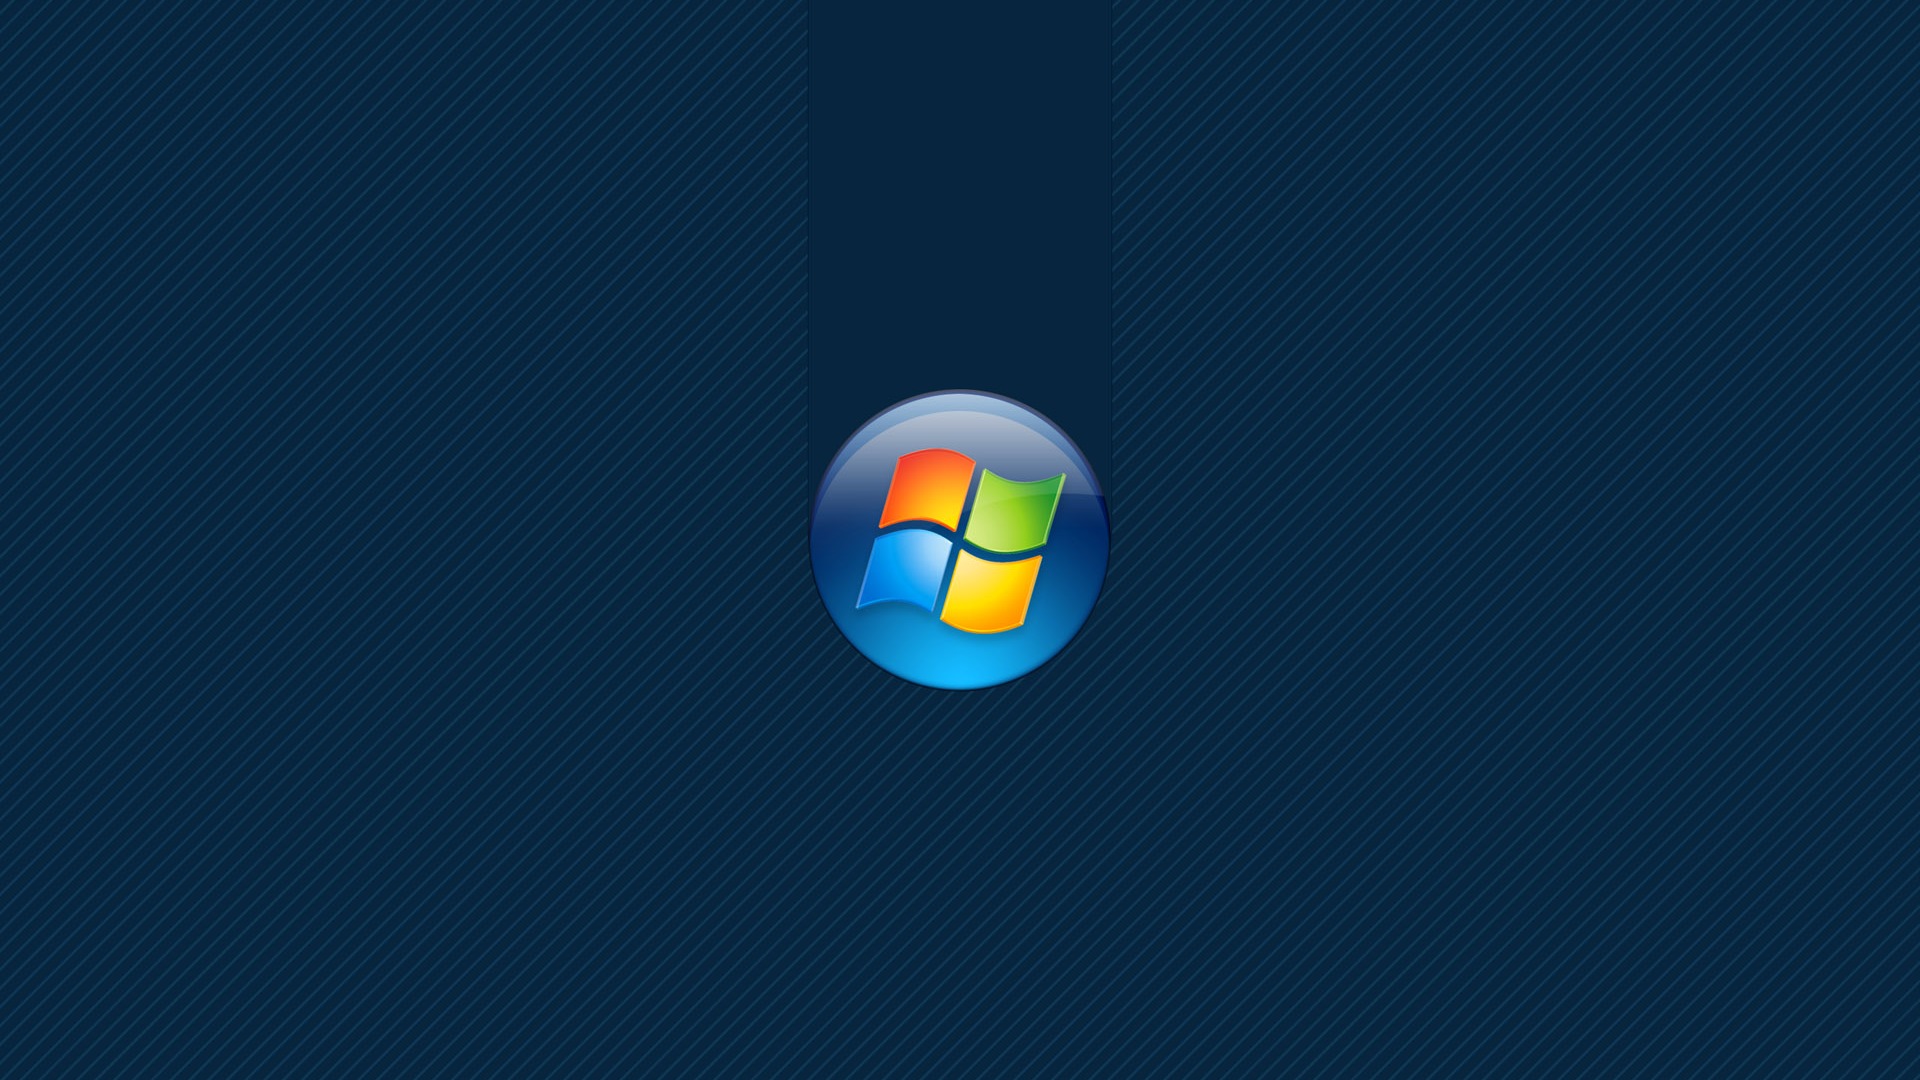 Windows logo wallpaper 3051